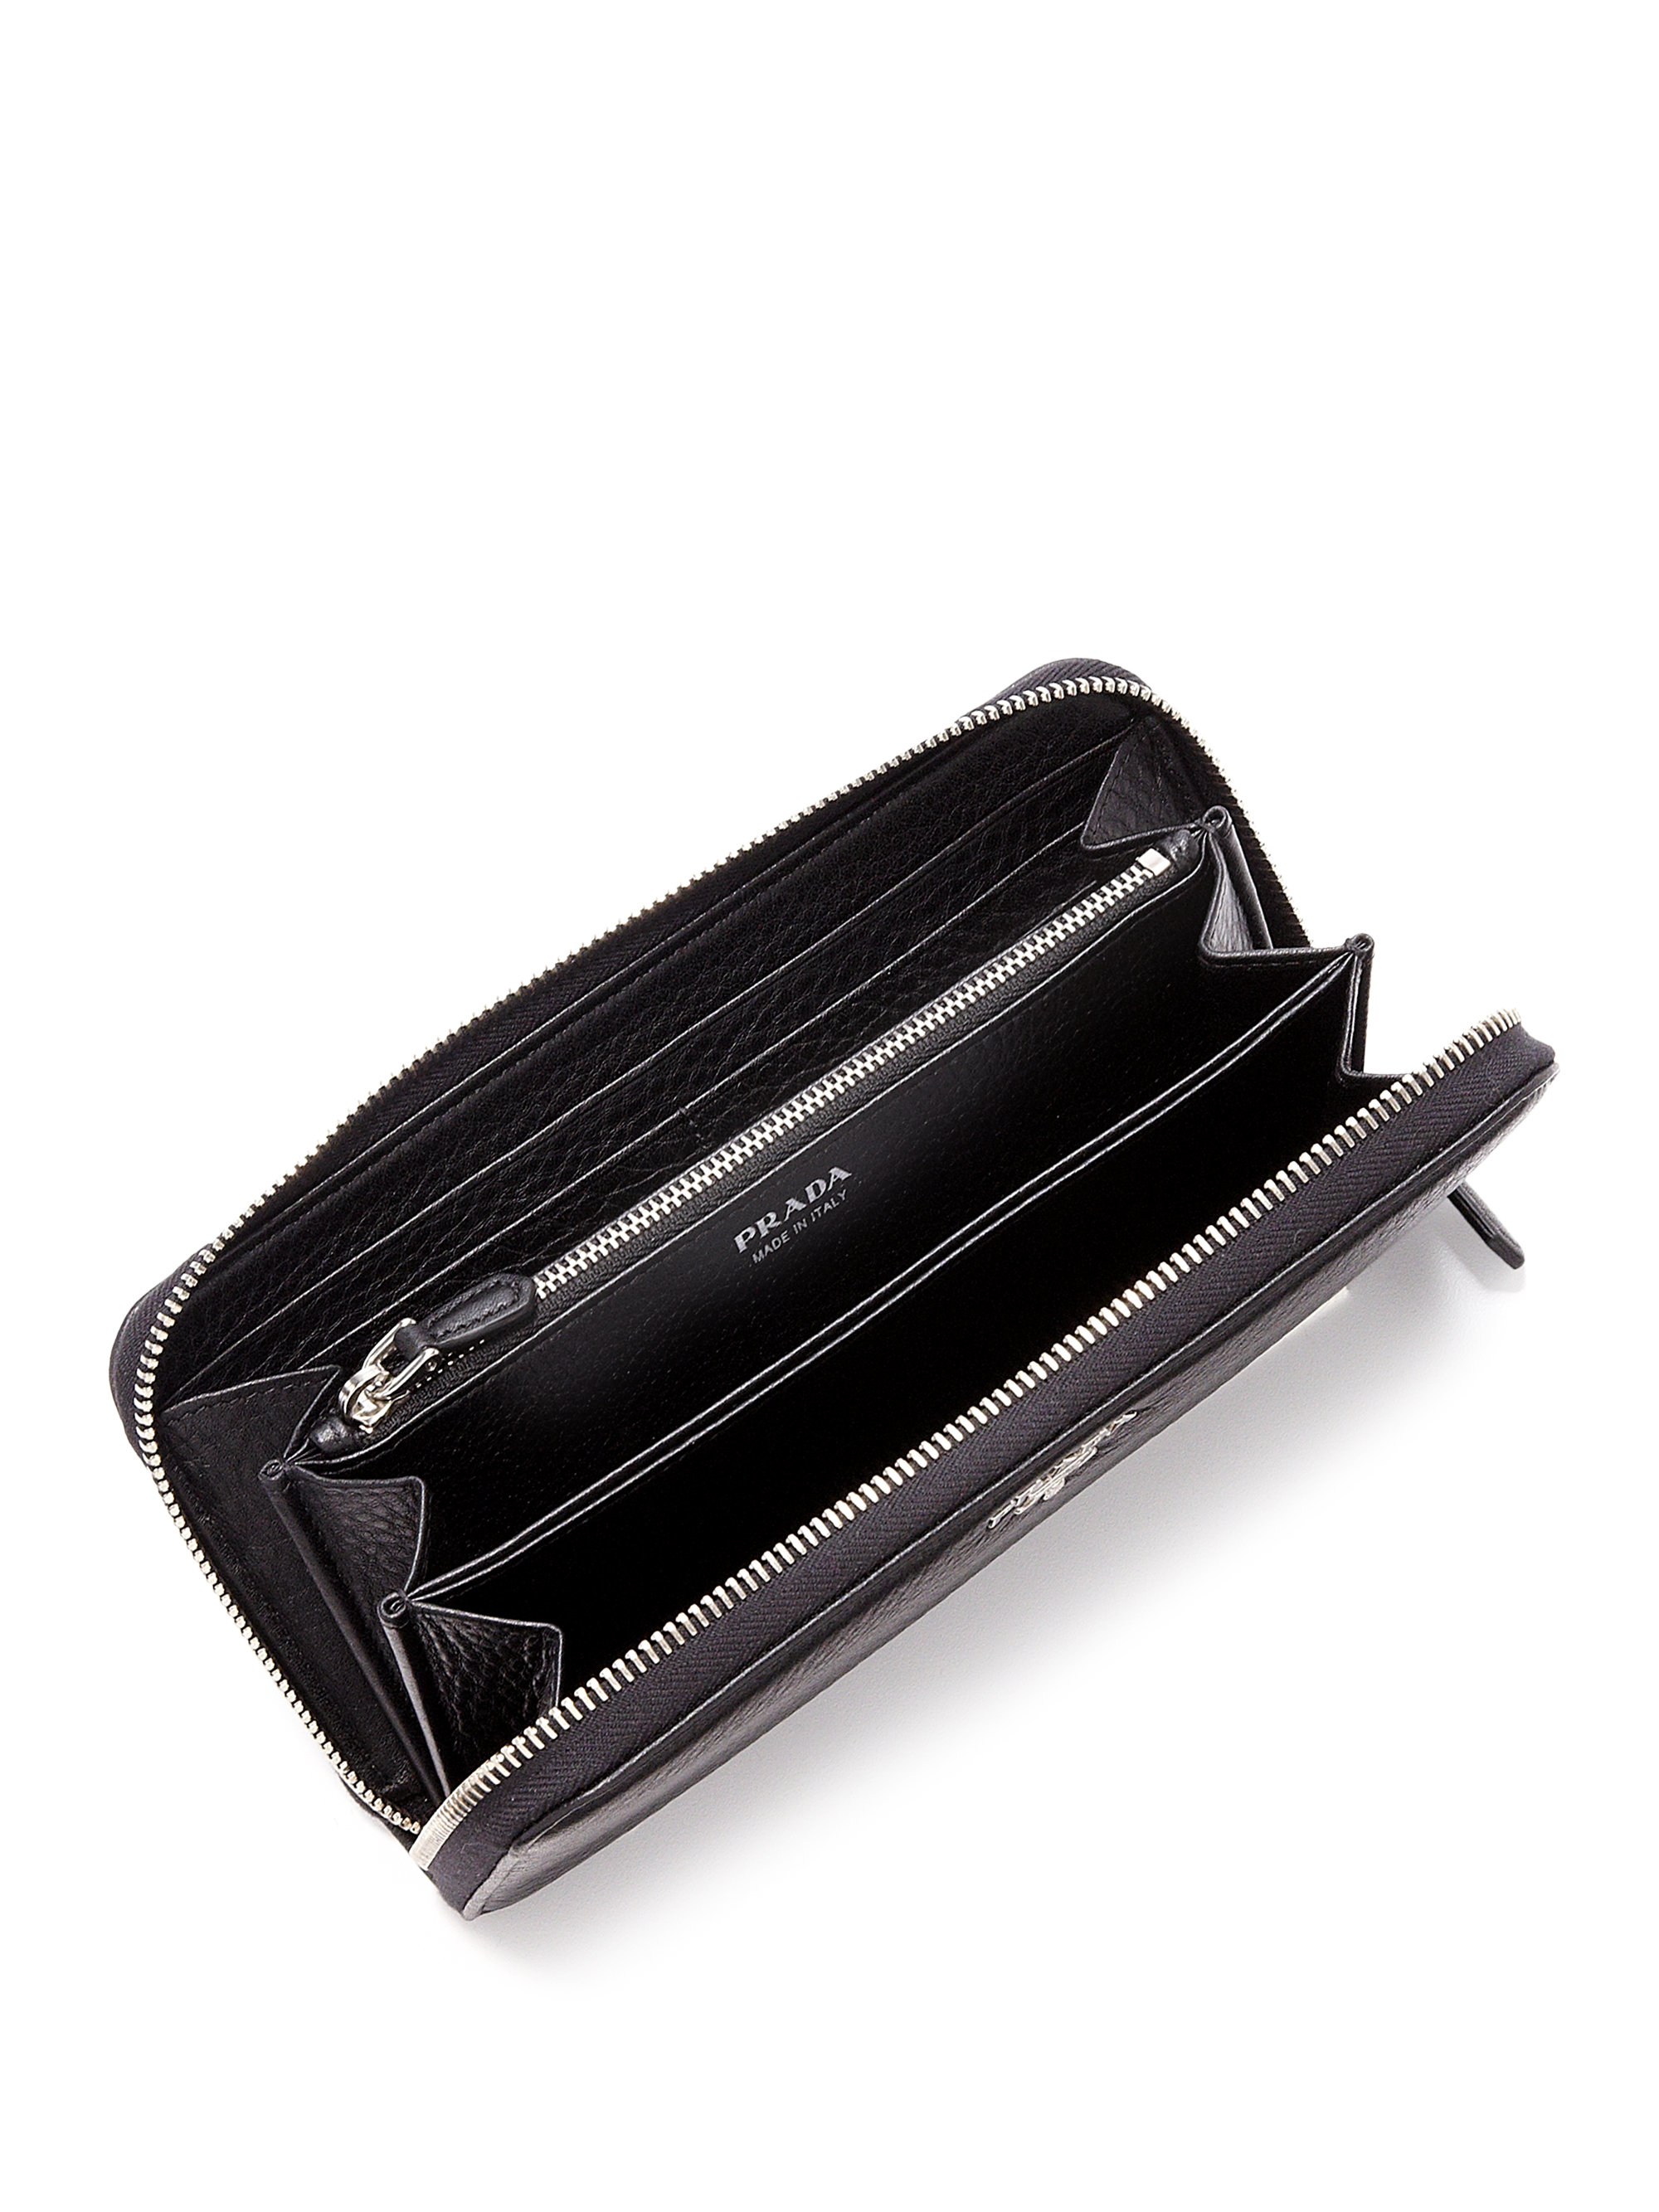 Prada Daino Leather Zip Continental Wallet in Black | Lyst  